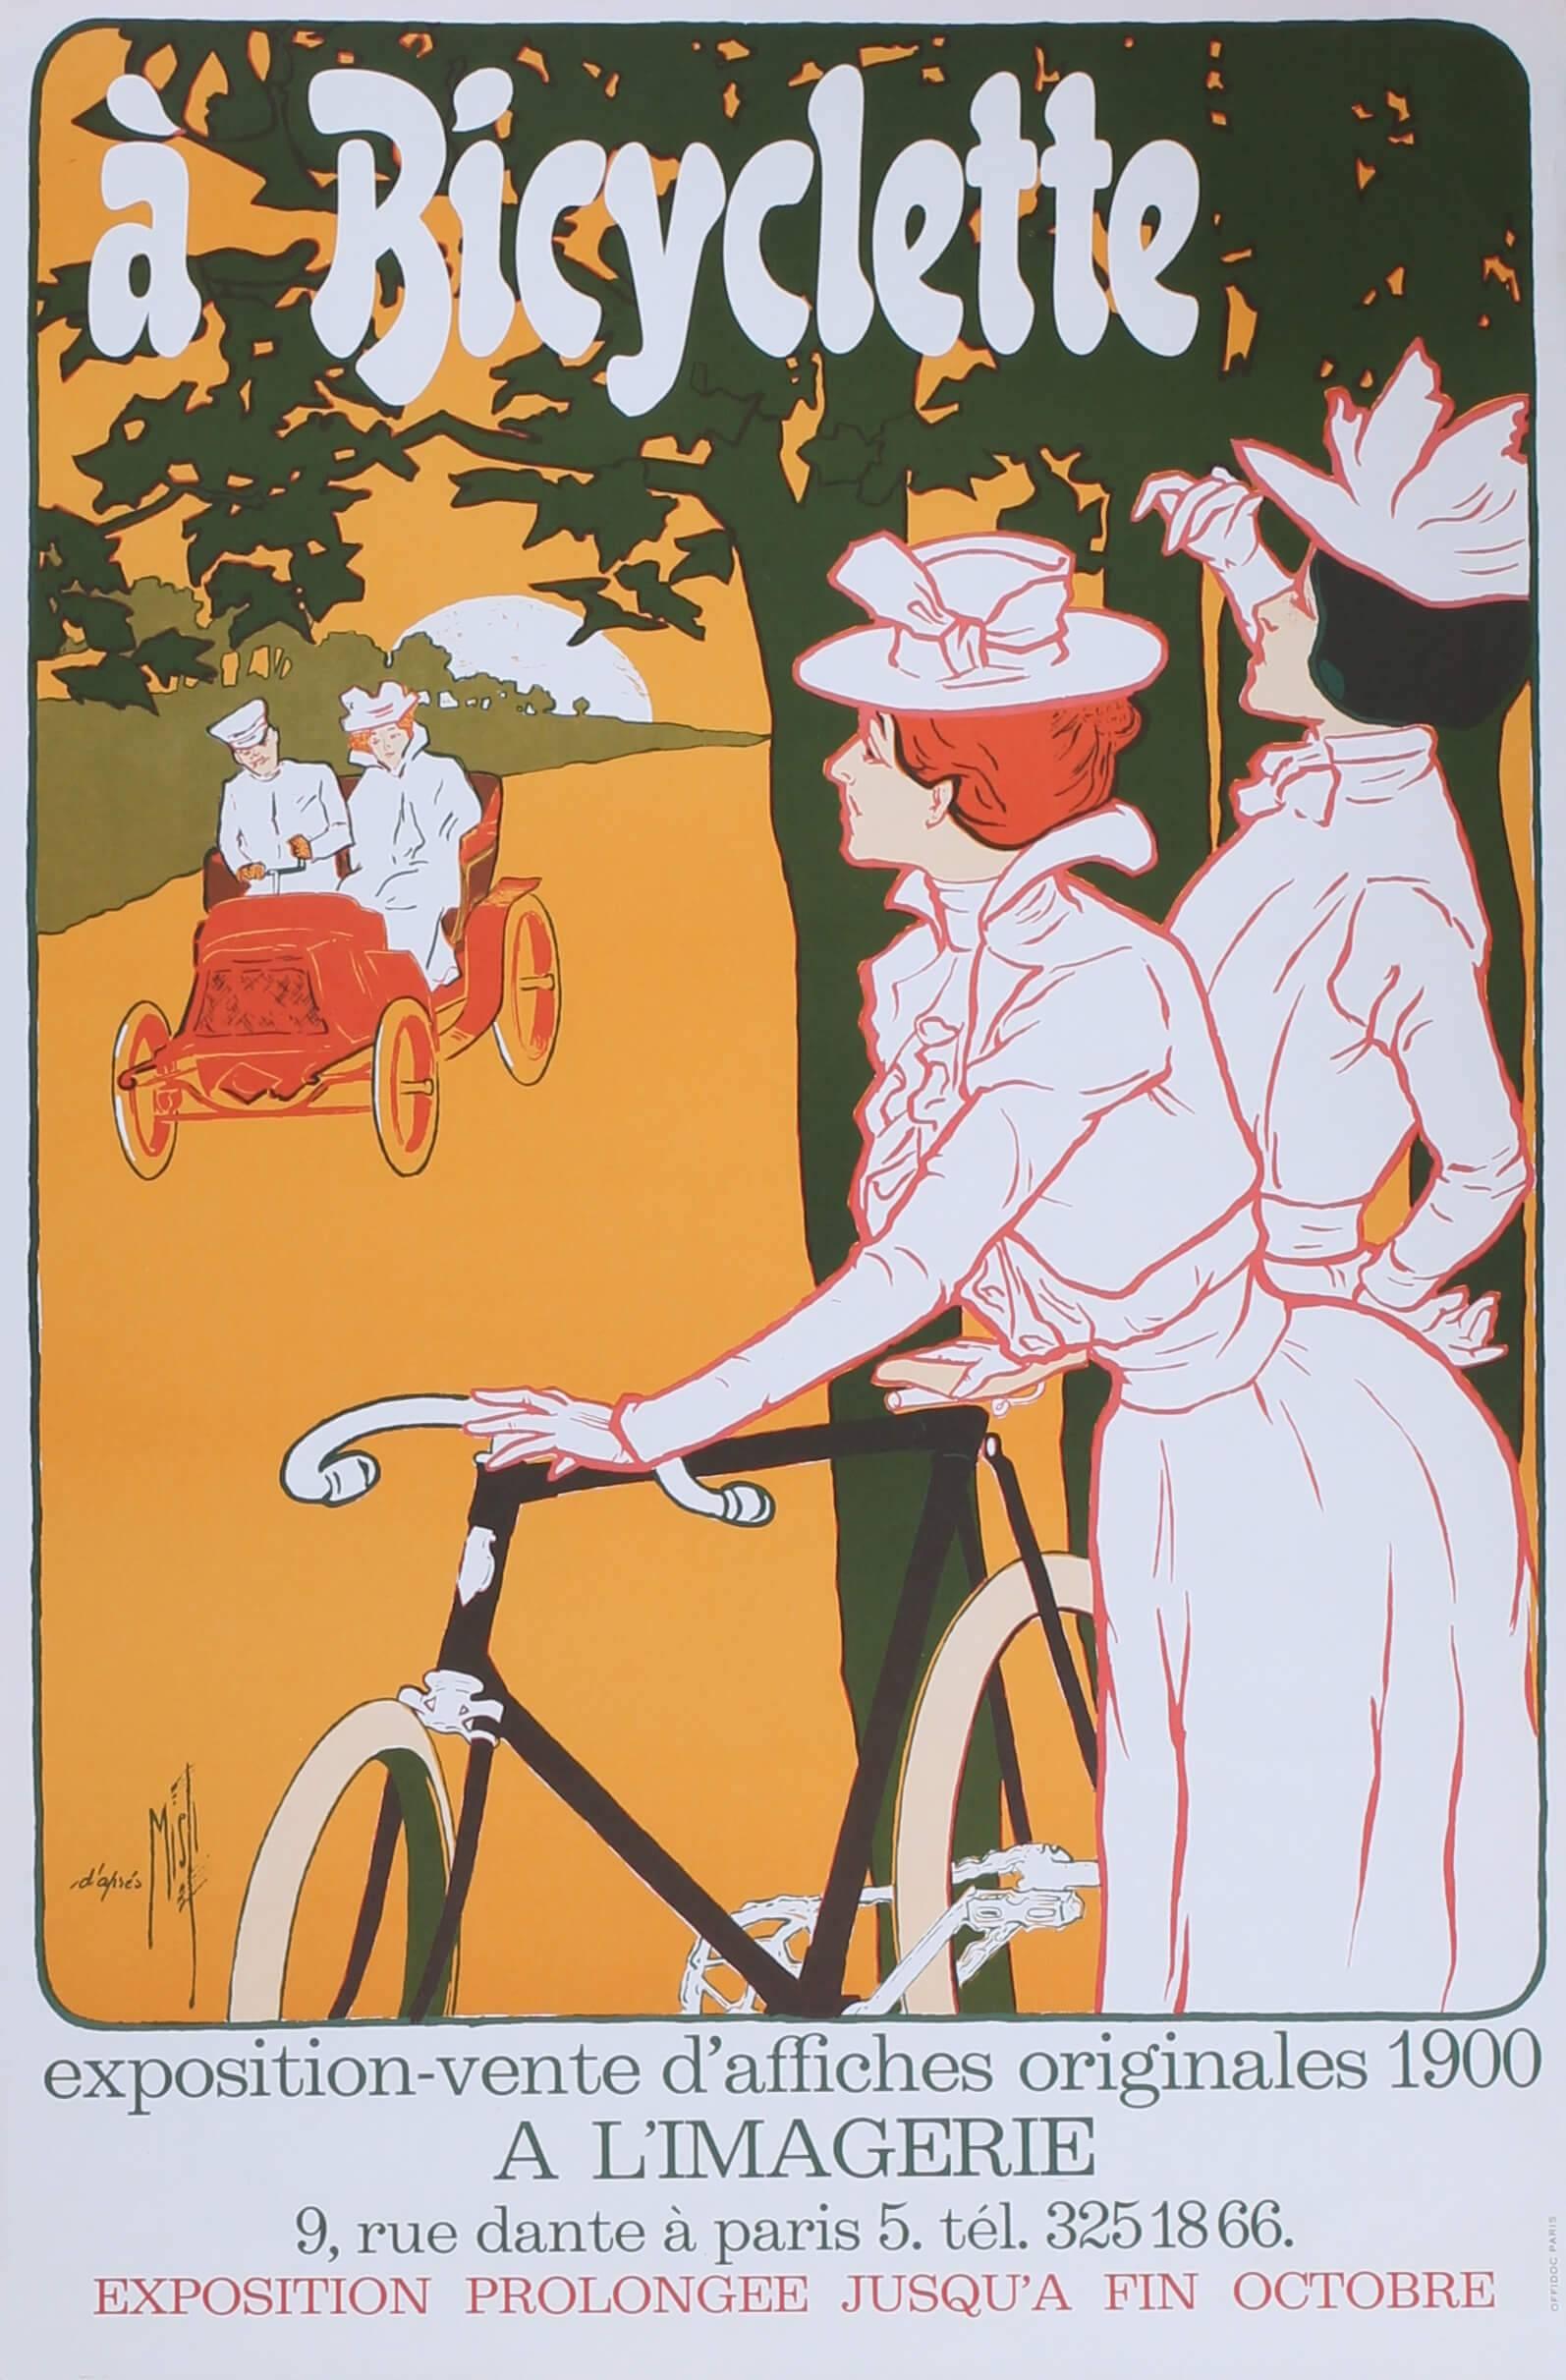 Unknown Figurative Print - A' Bicyclette, exposition - vente d'affiches originales 1900